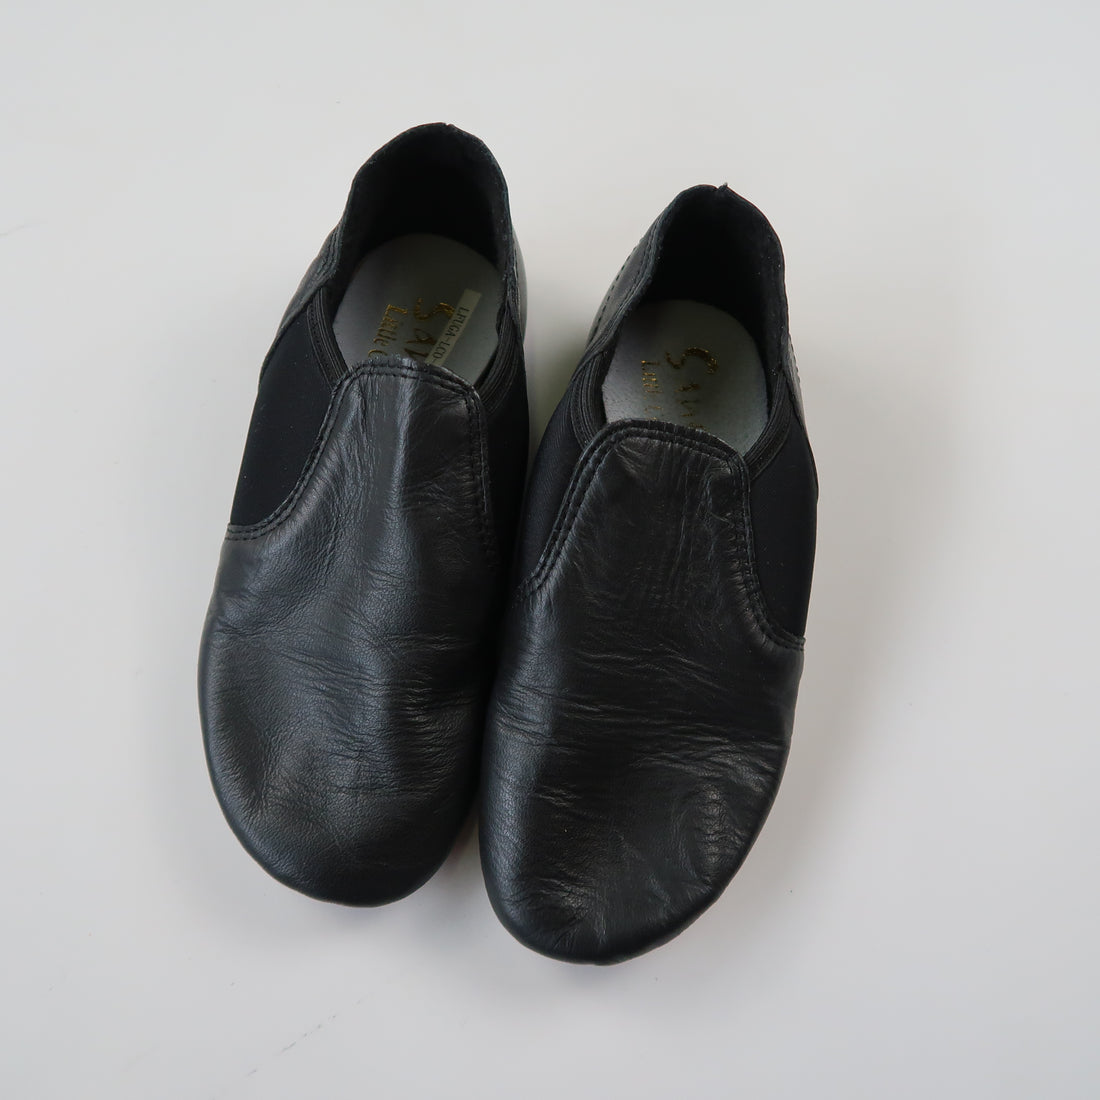 Sansha - Jazz Shoes (Shoes - 7.5-8)